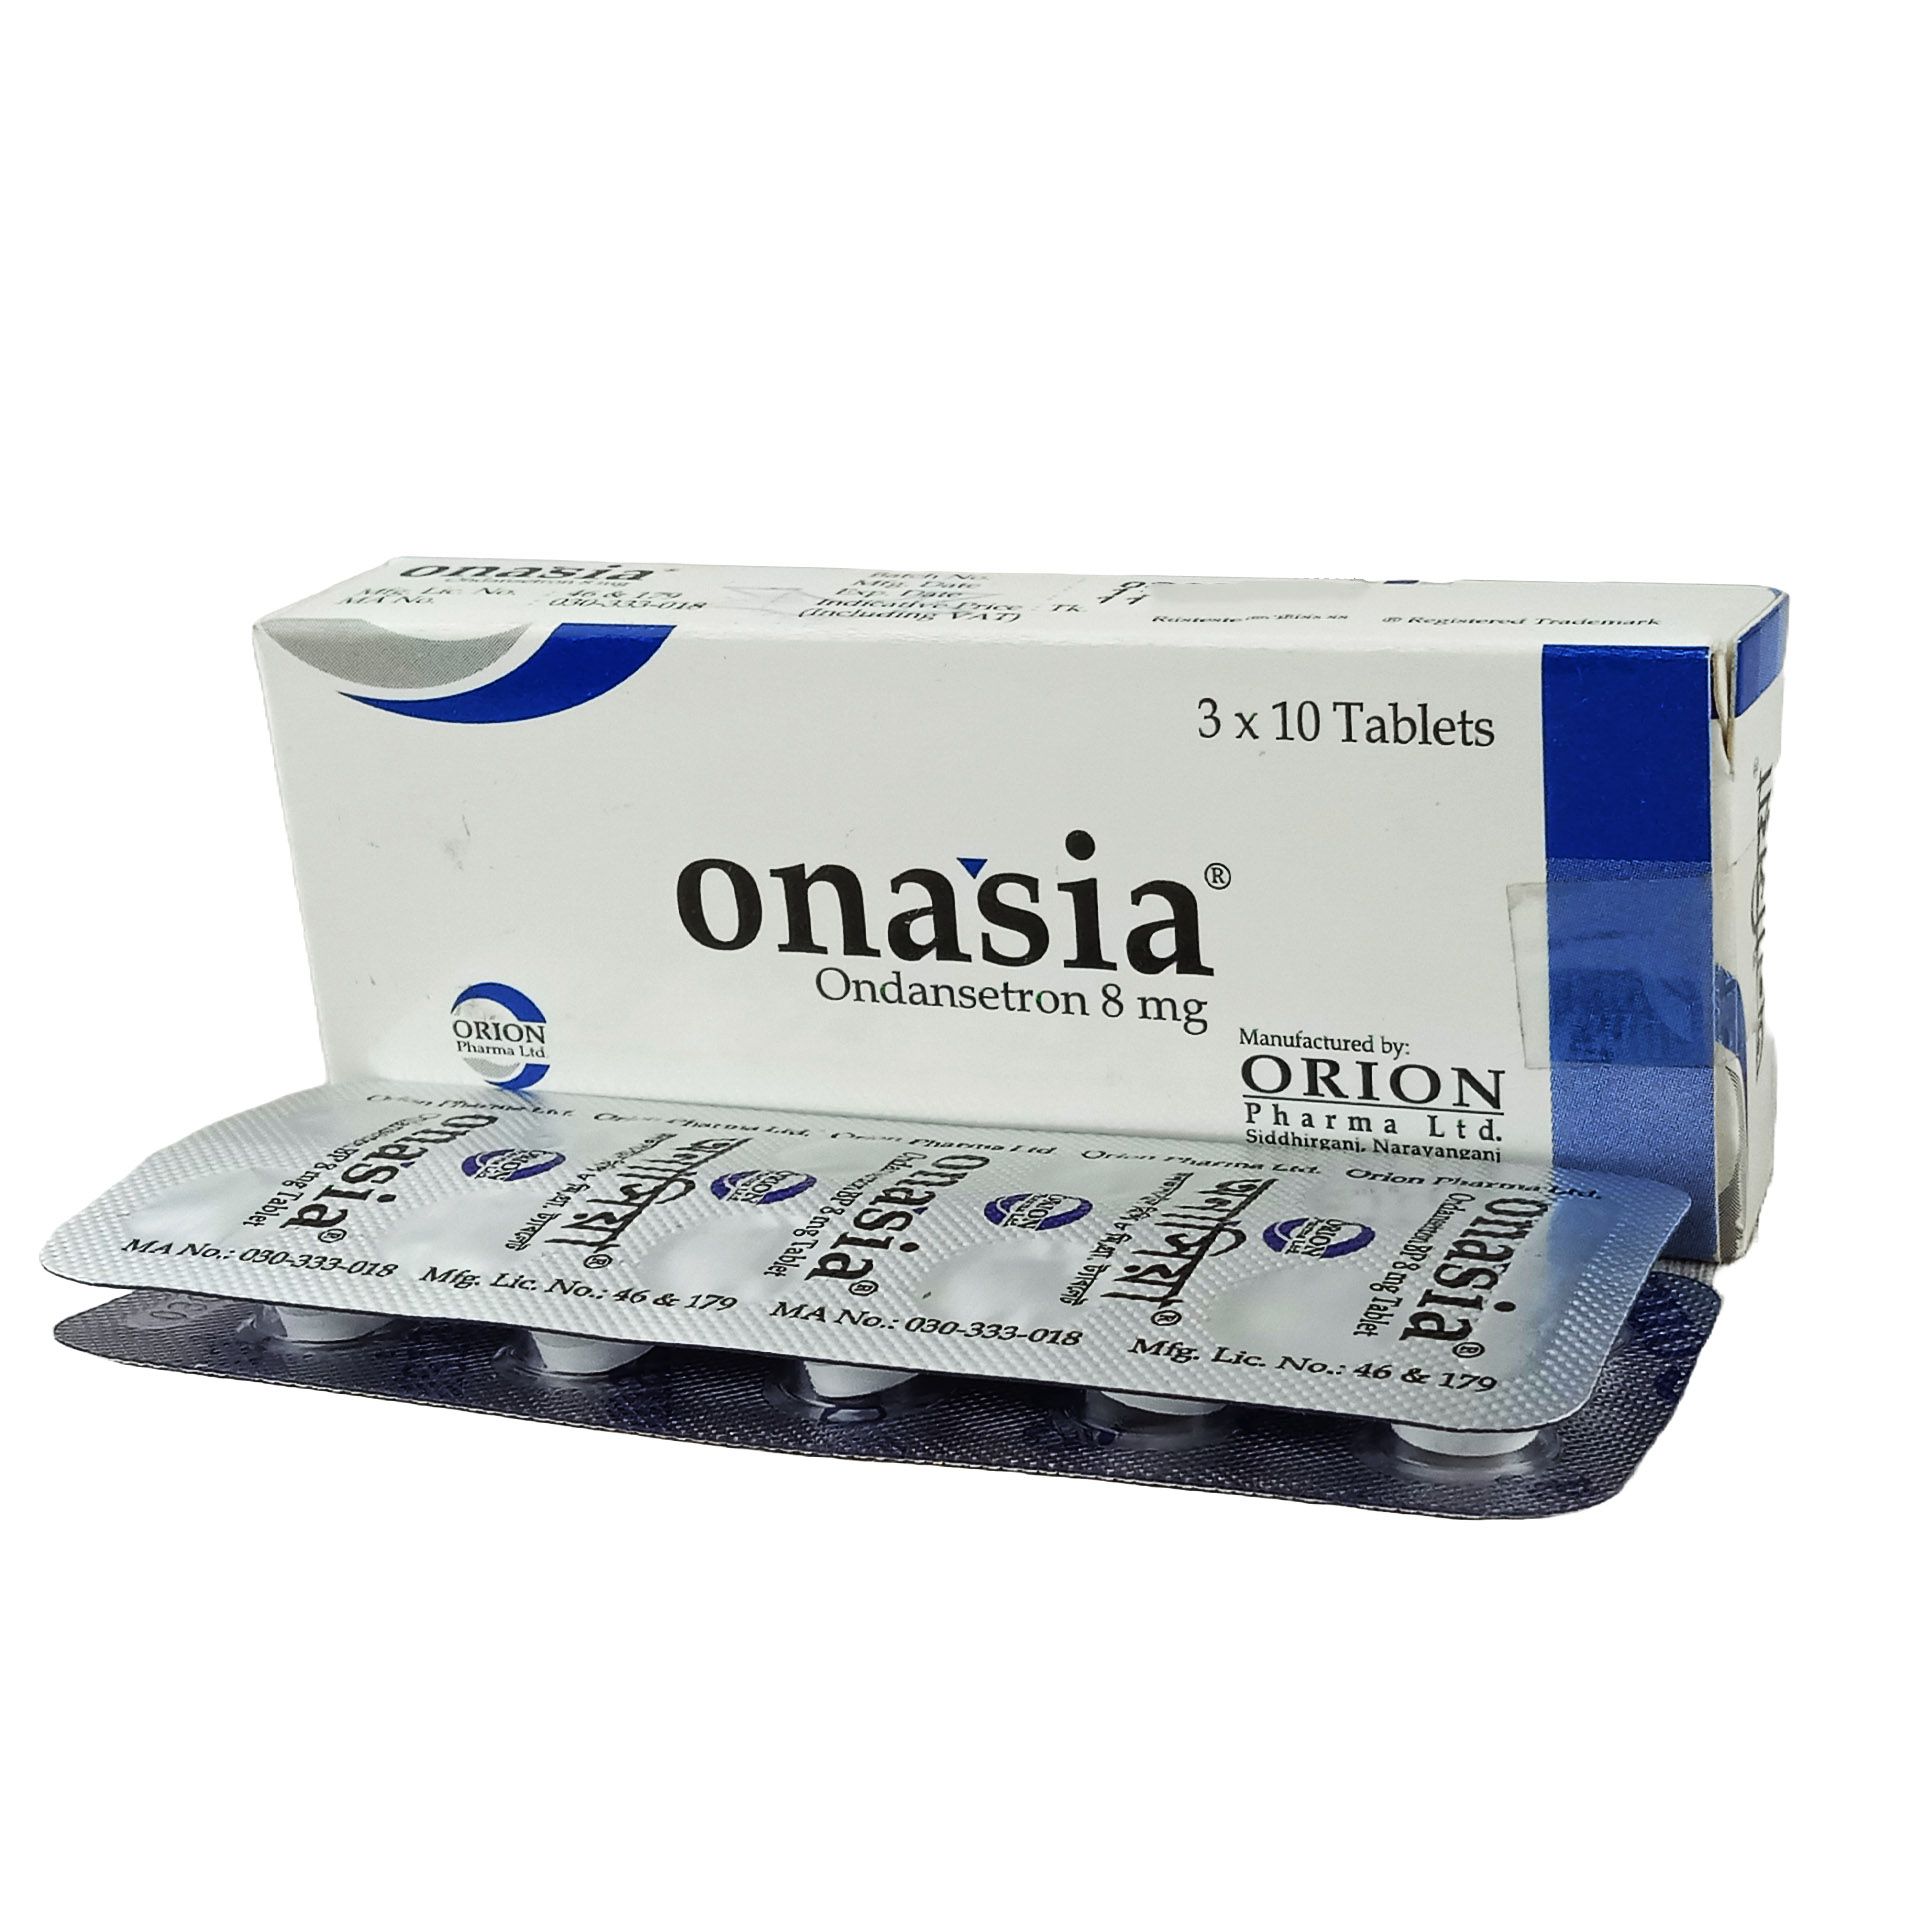 Onasia 8mg Tablet